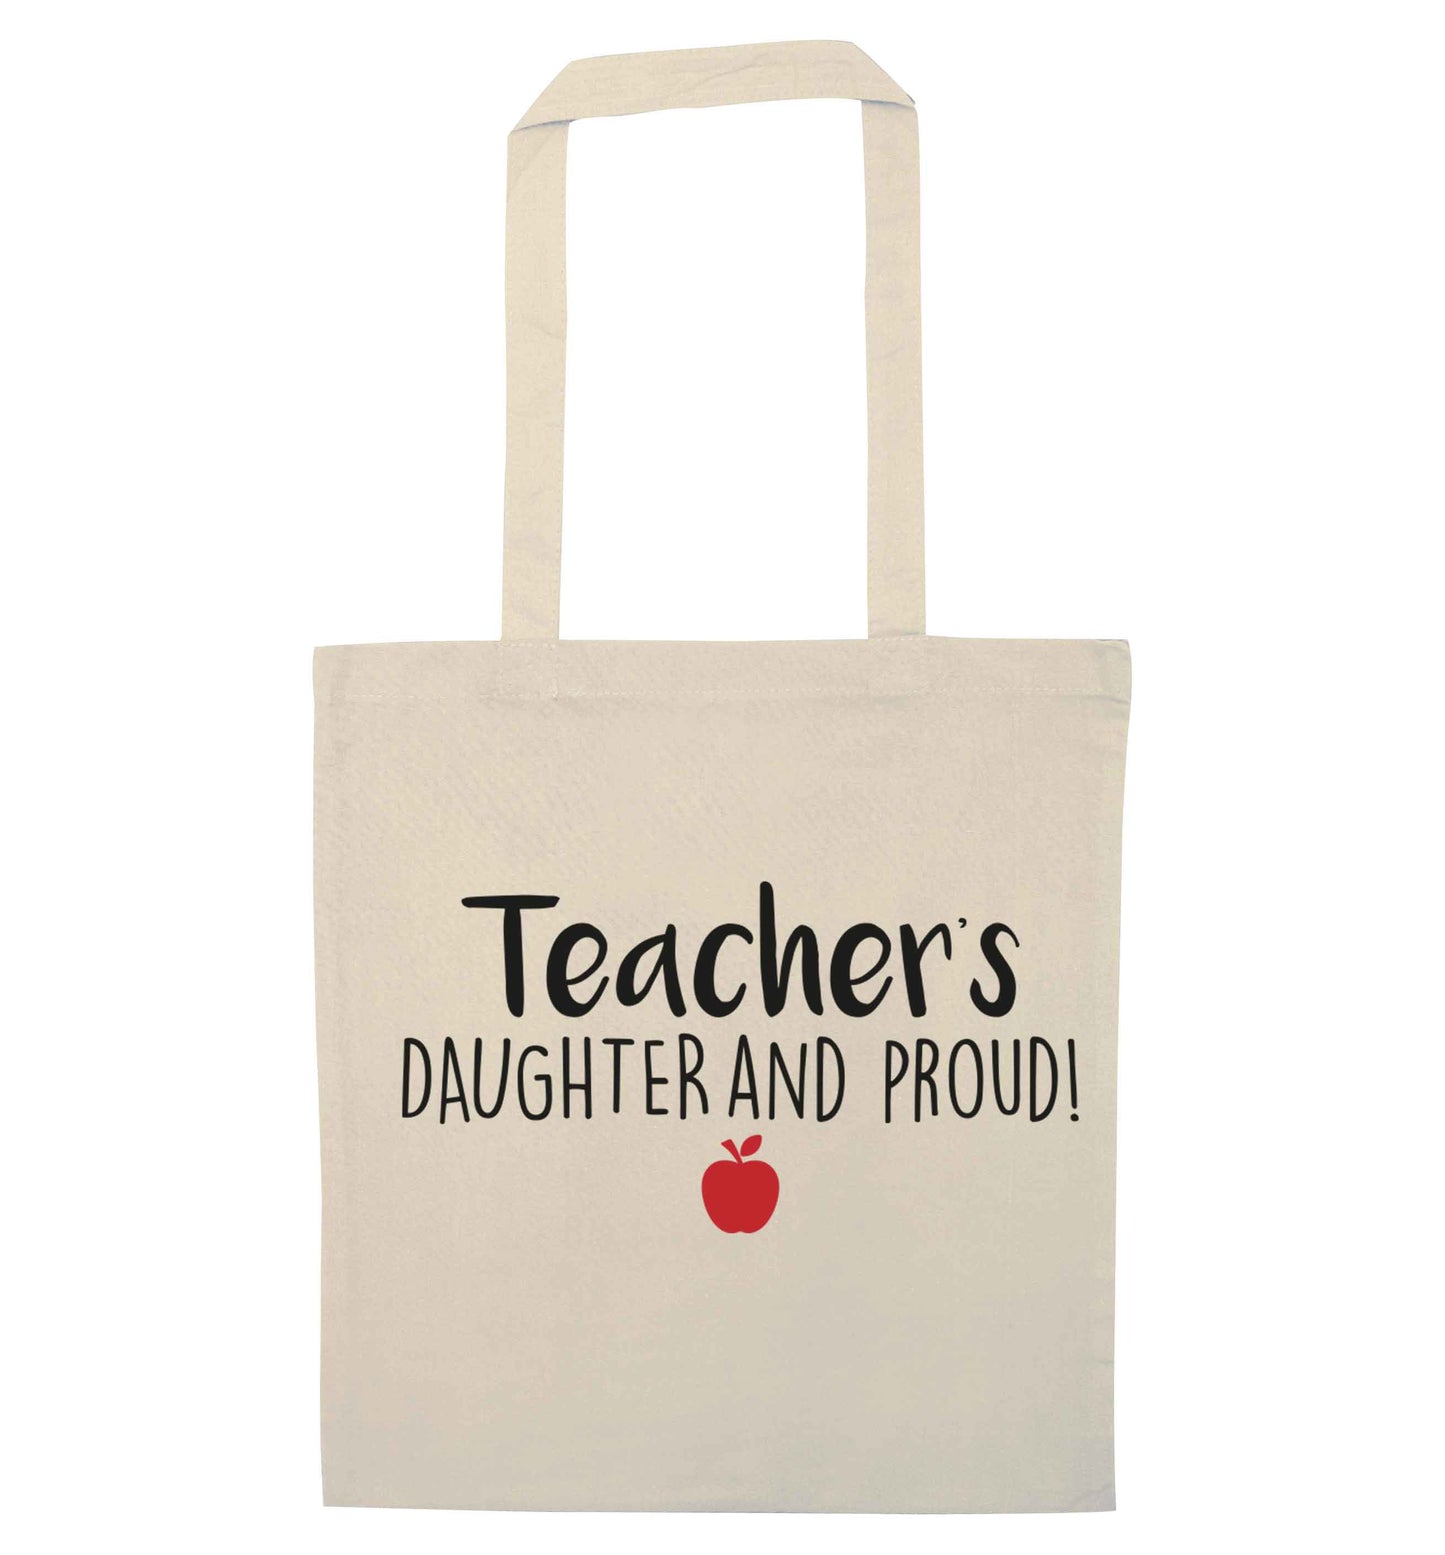 Teachers daughter and proud natural tote bag